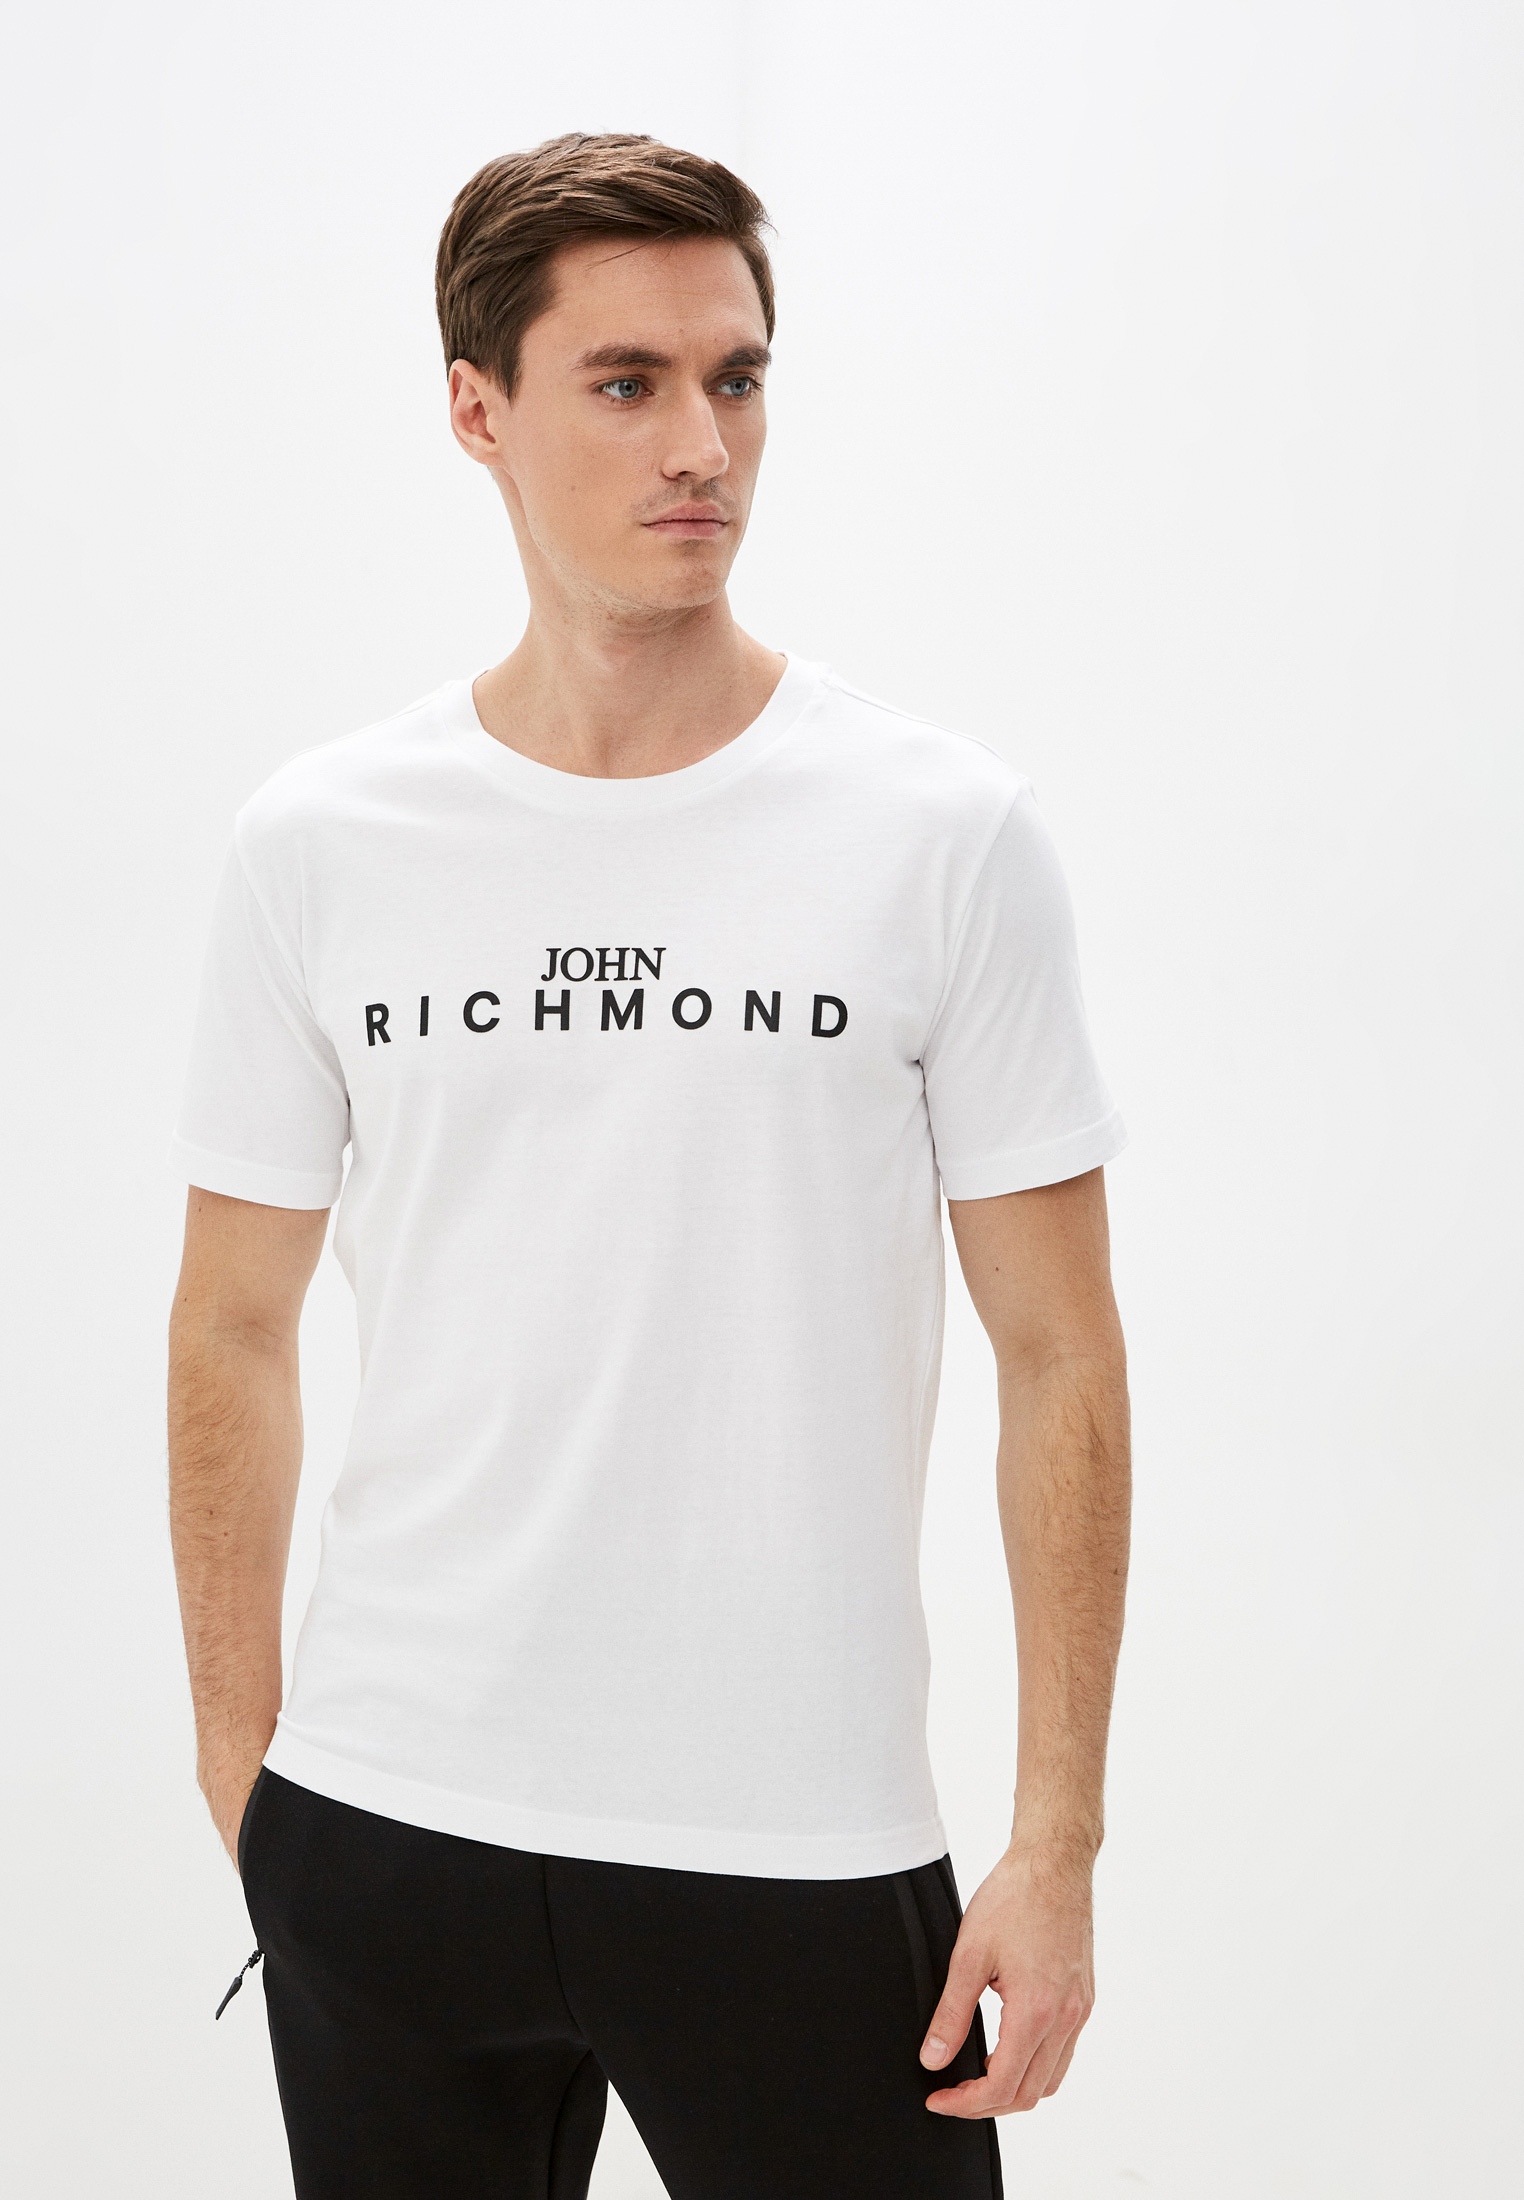 Футболка ричмонд. Футболка Джон Ричмонд белая. John Richmond одежда мужская футболка. John Richmond футболка мужская белая. Майка Джон Ричмонд мужская.